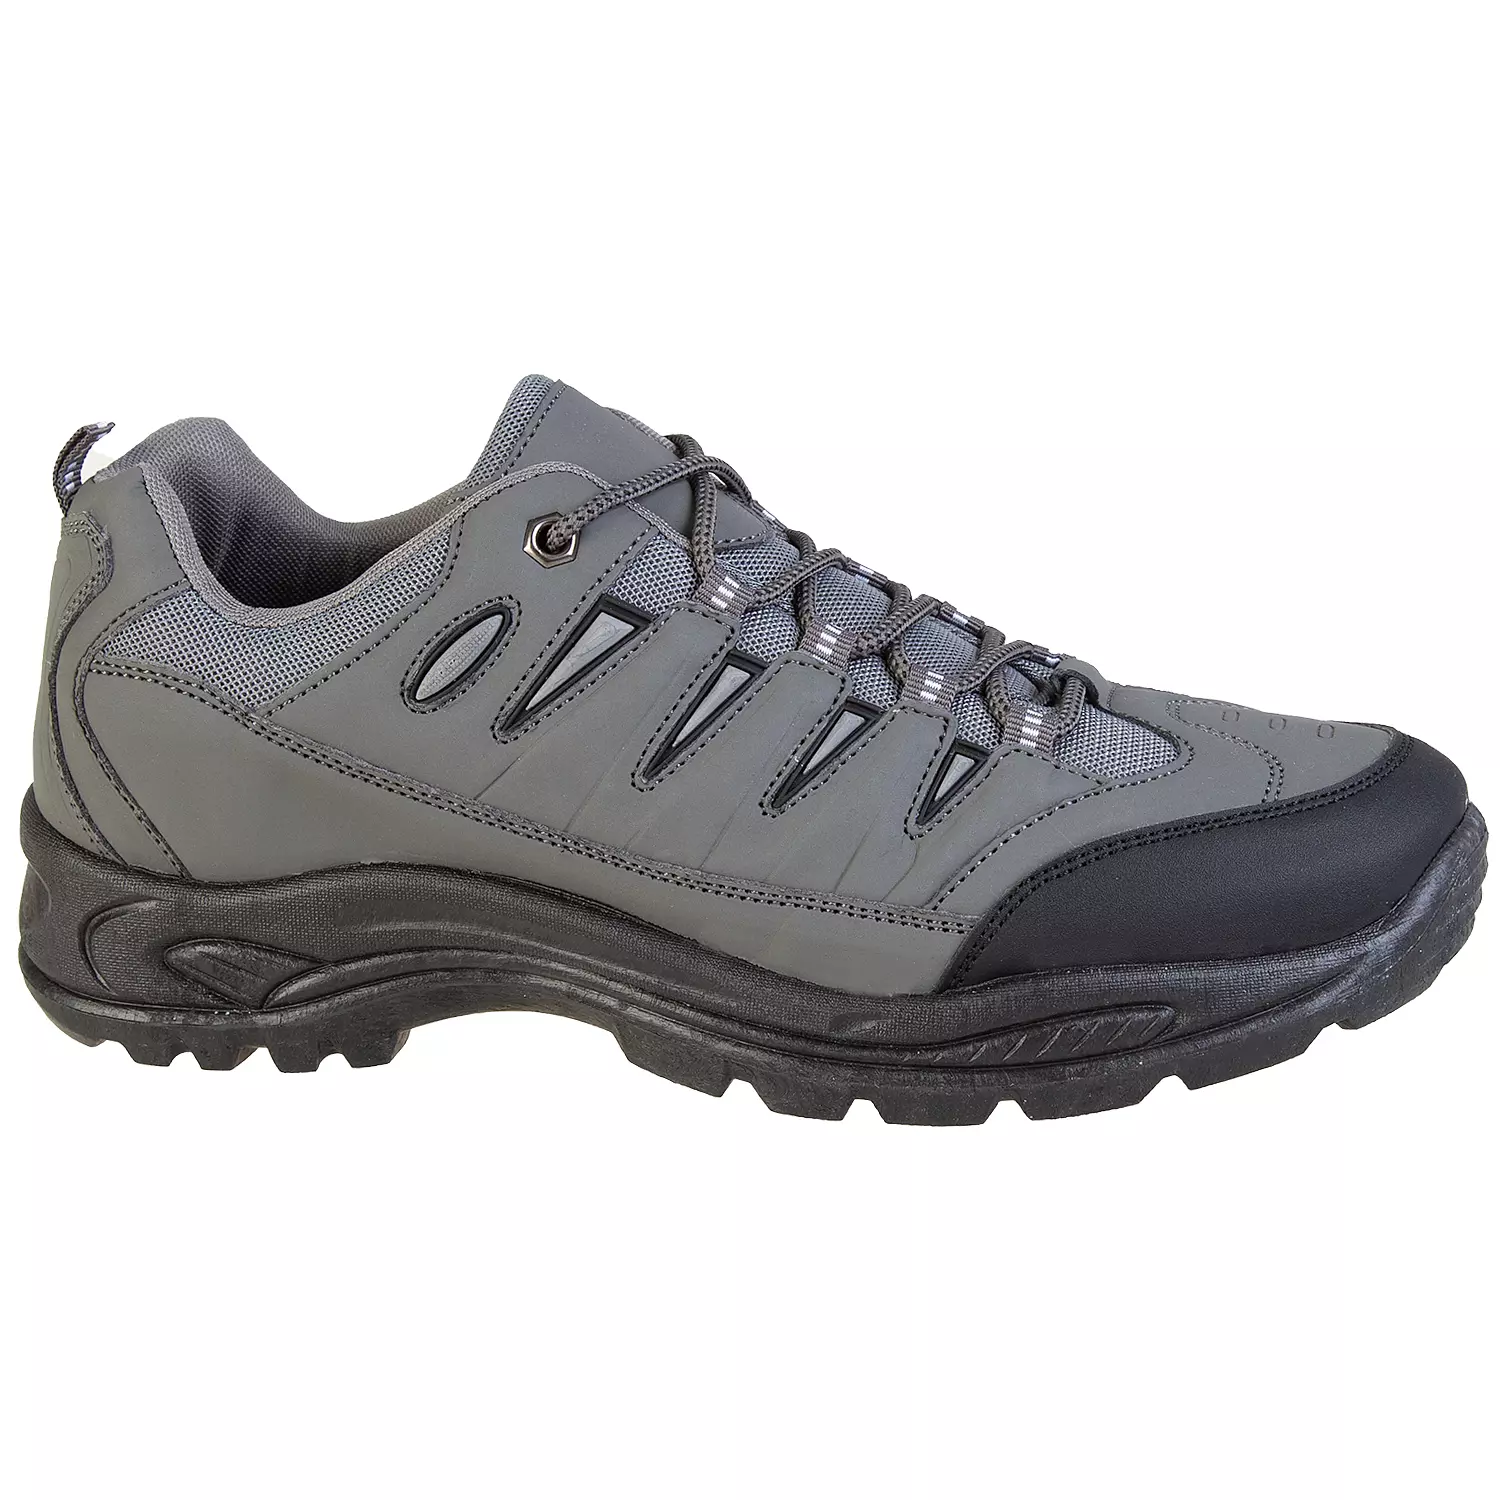 Men's low top waterproof trekking and hiking shoes, size 9